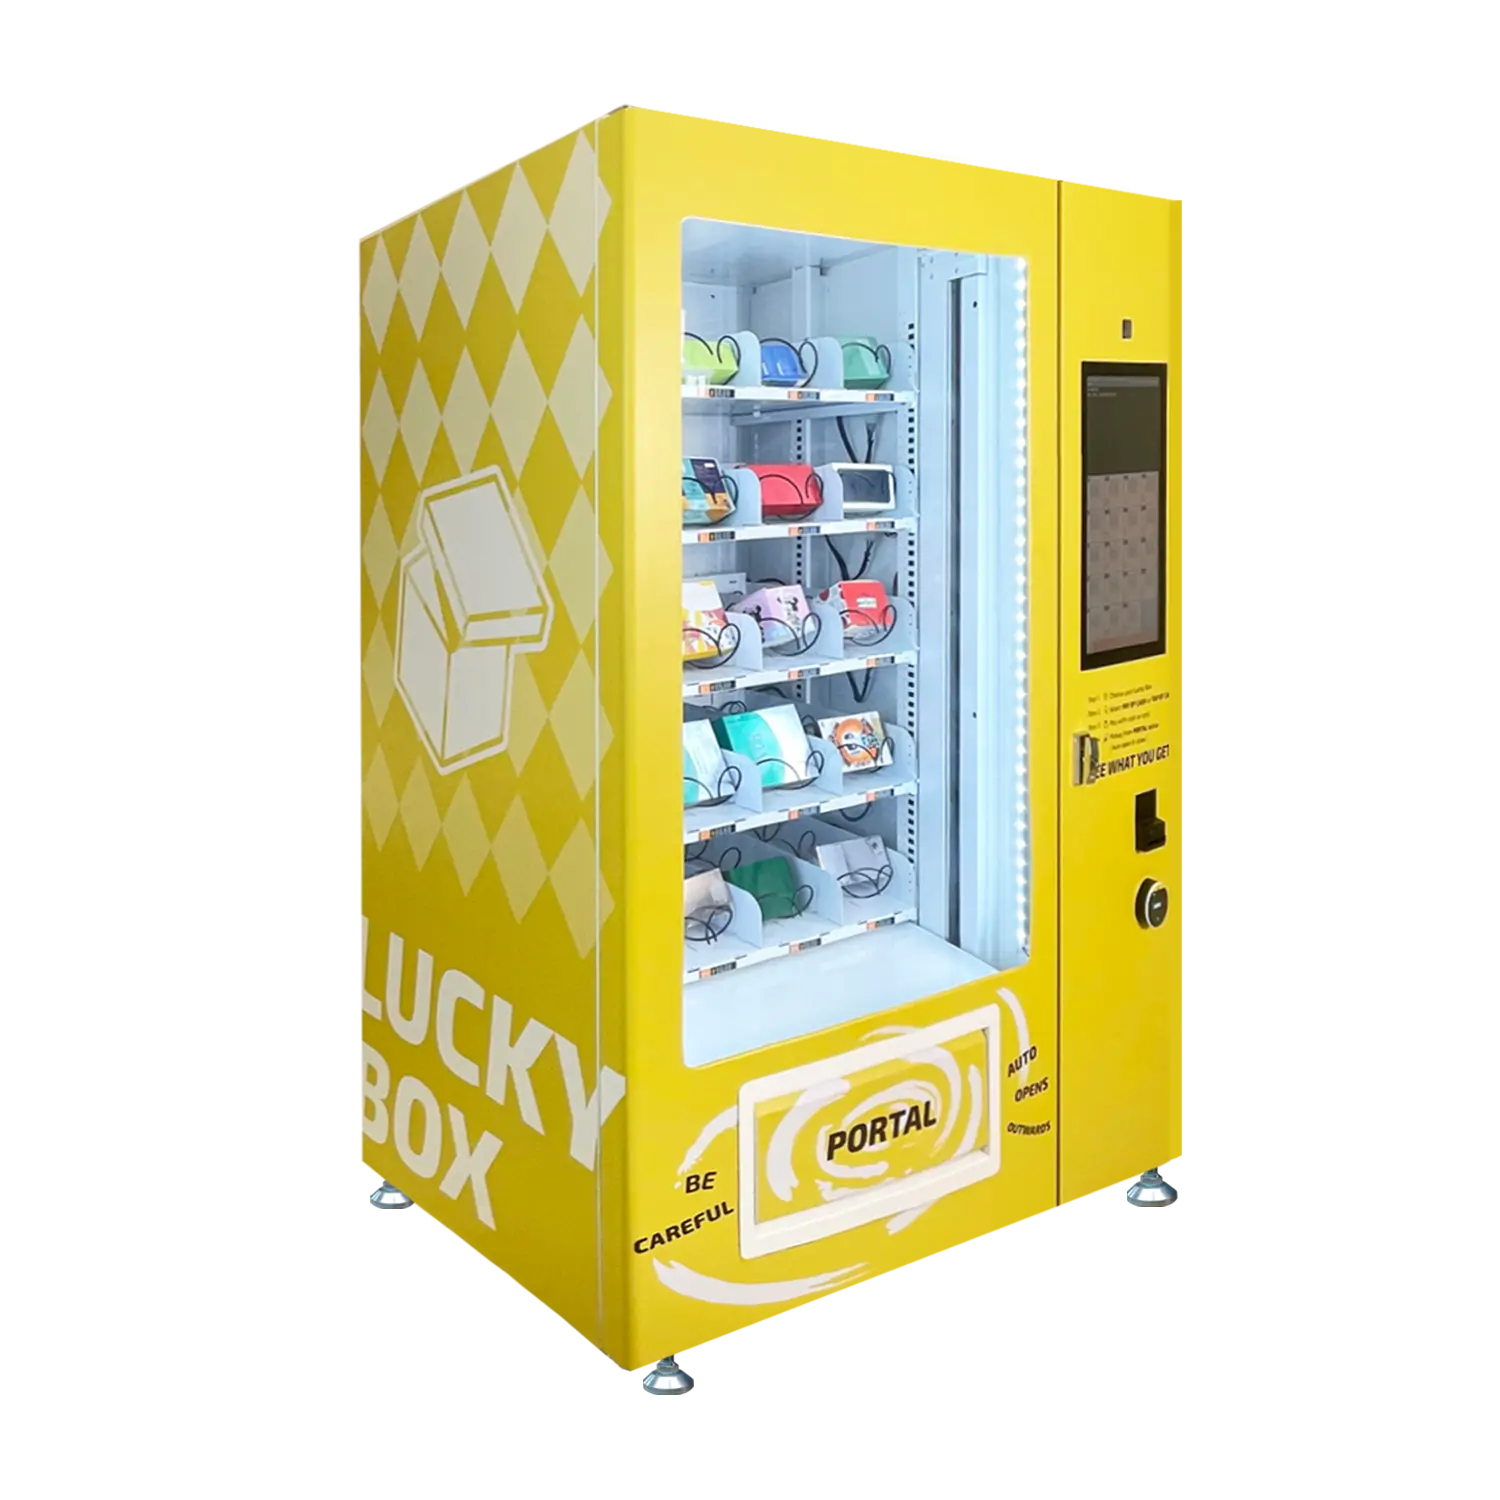 Lucky box vending machine